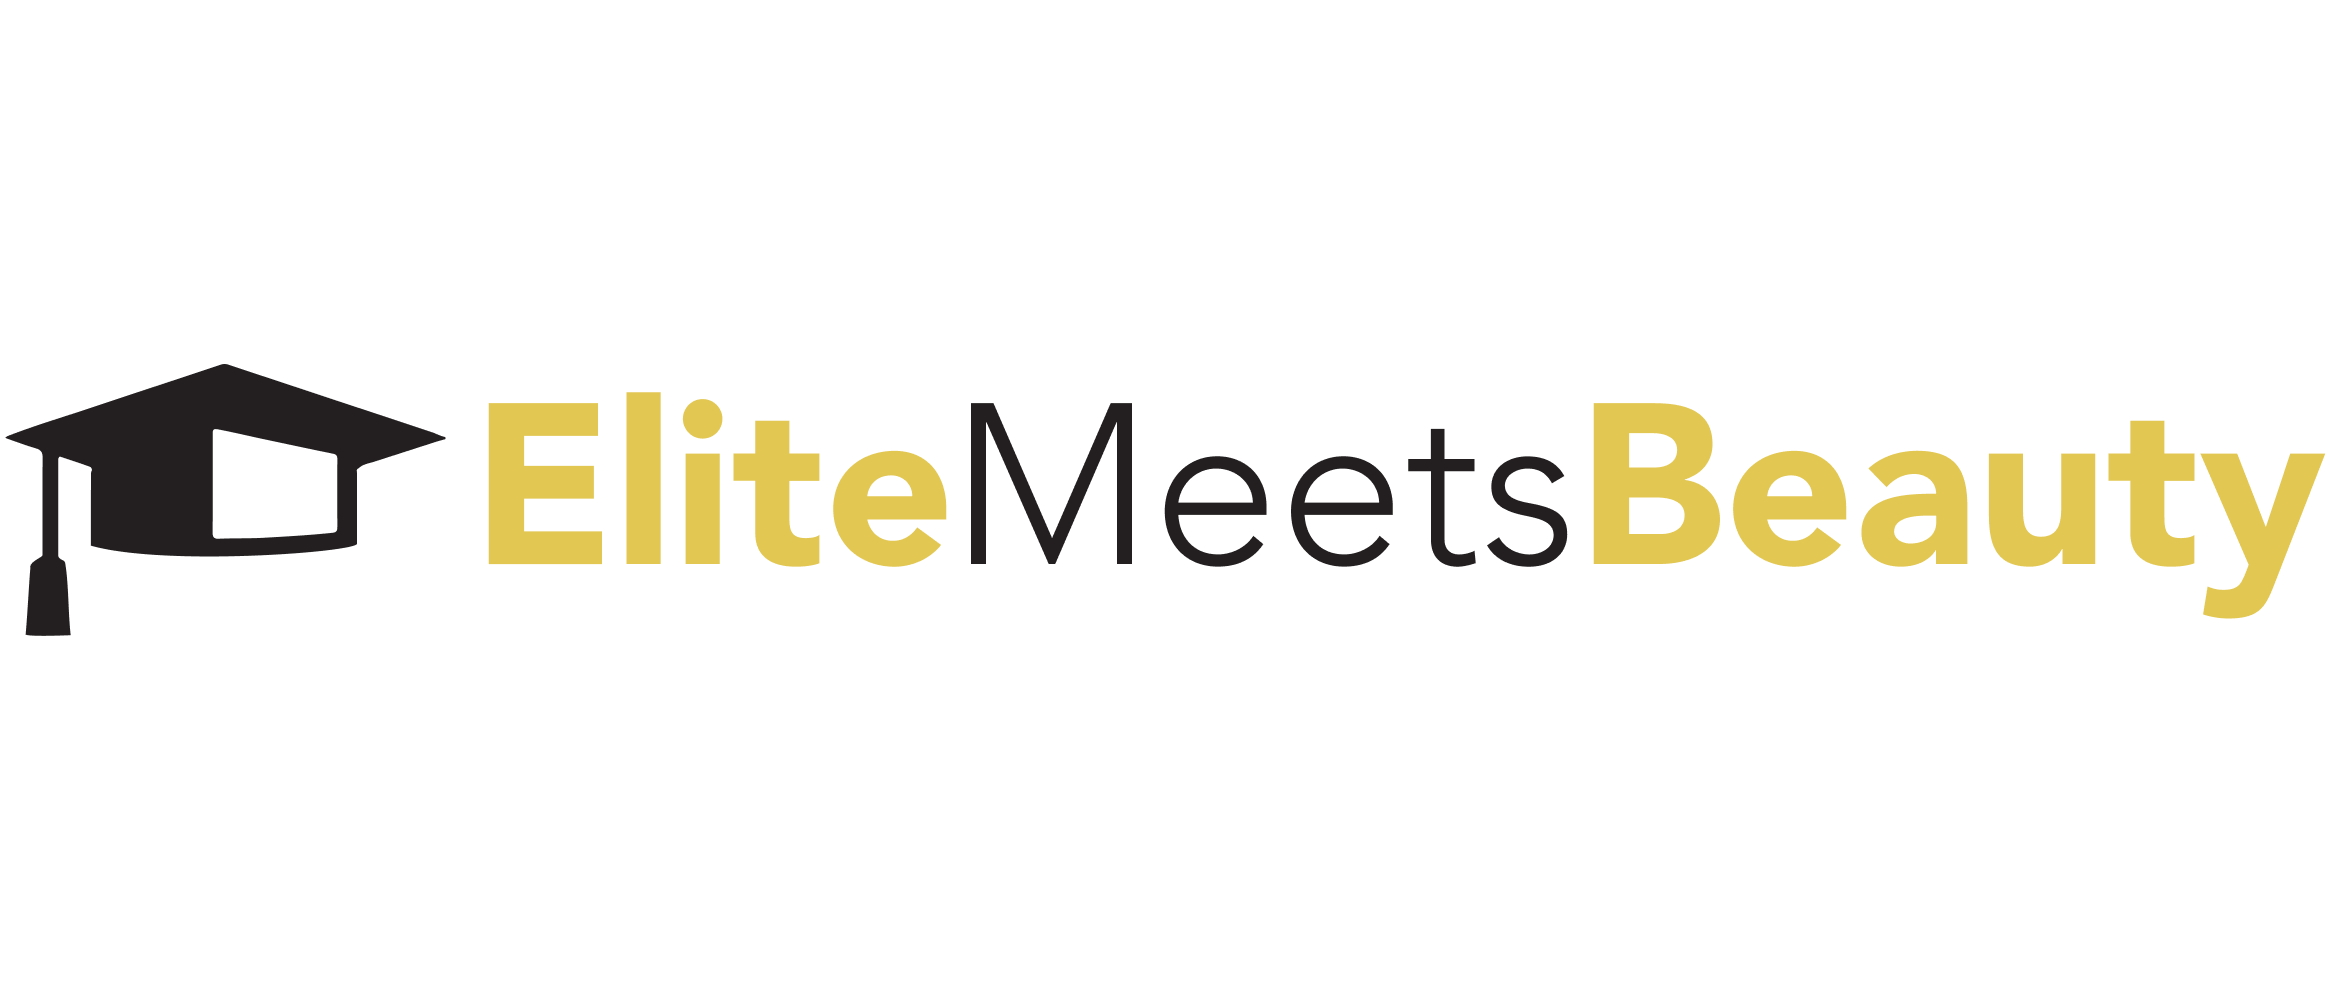 ElitemeetsBeauty.com